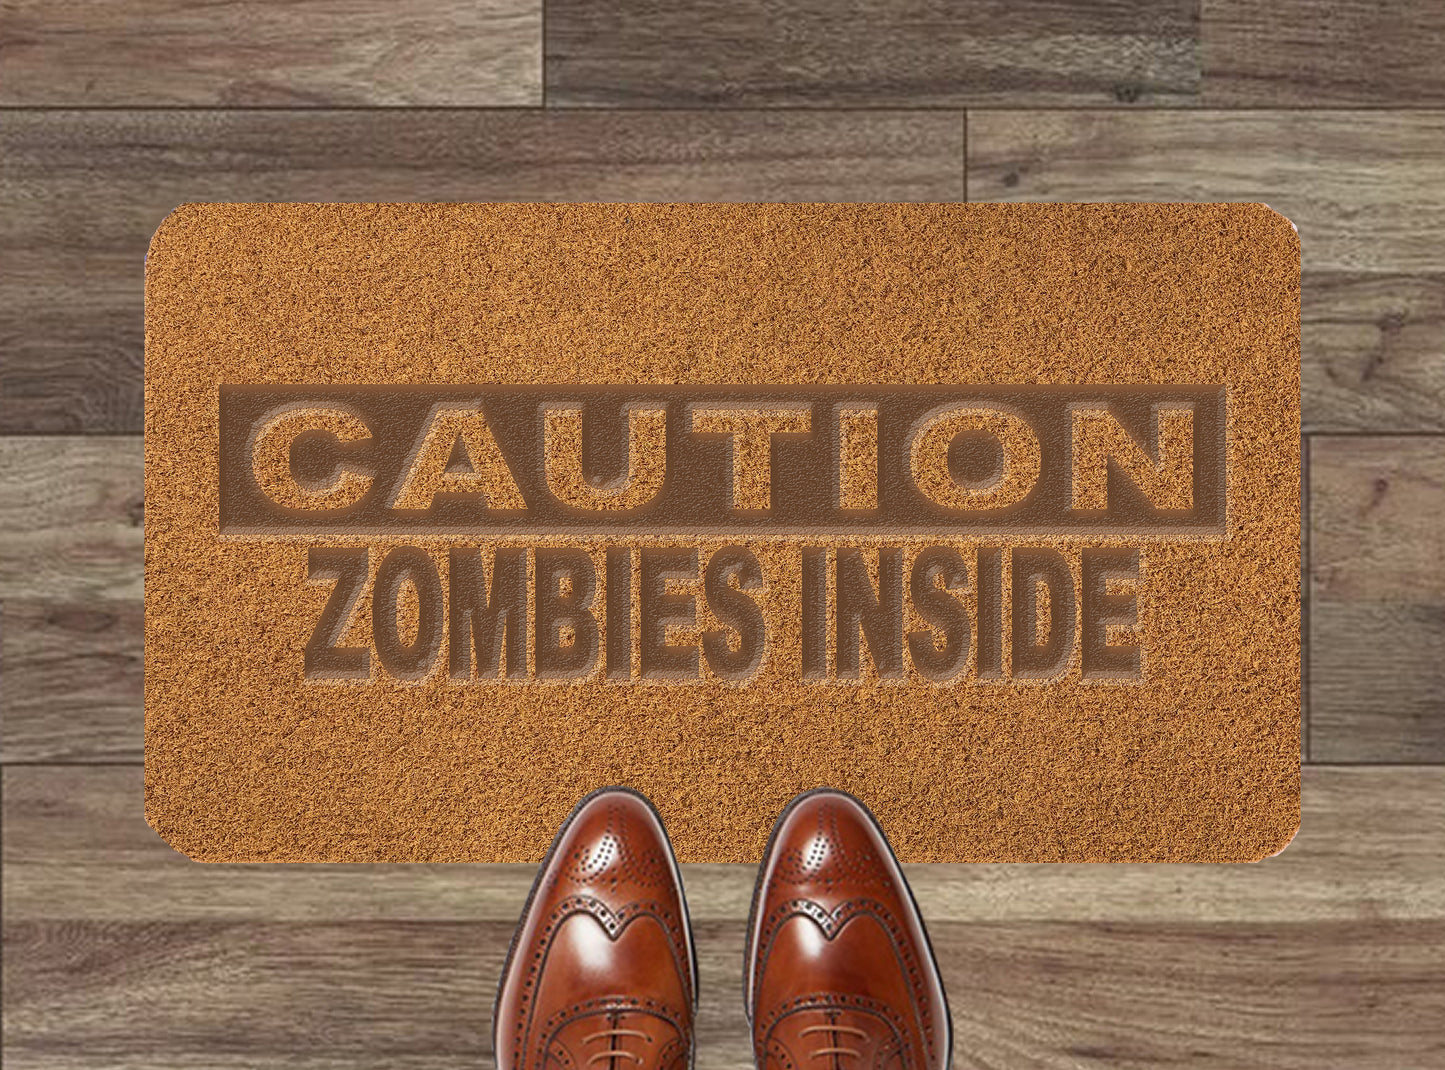 Halloween Caution Zombies